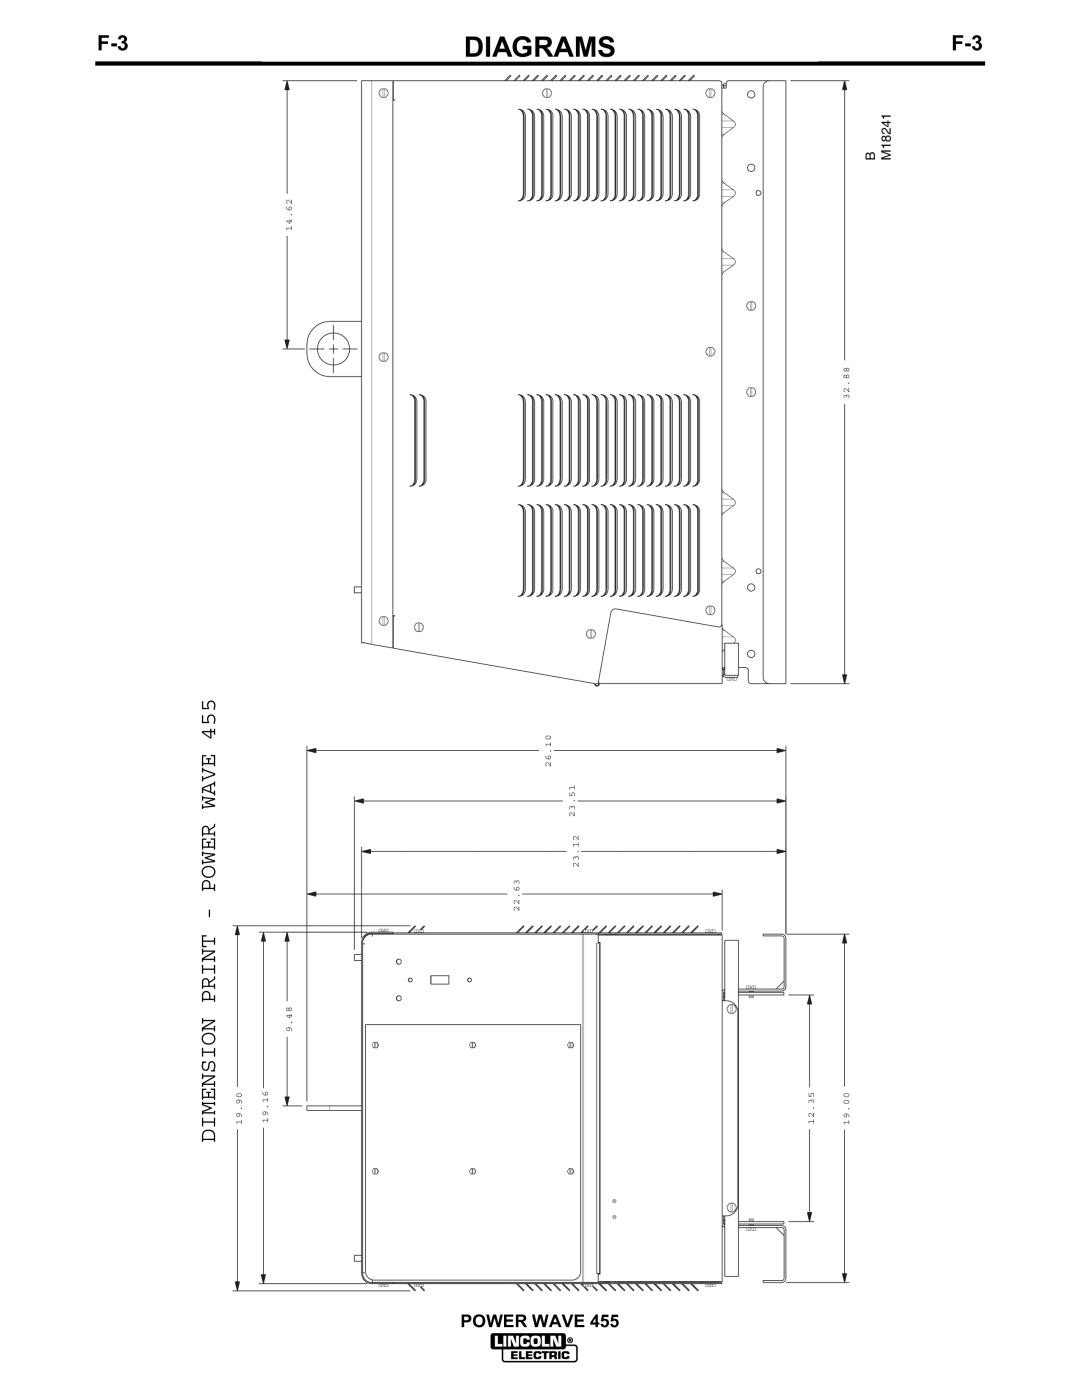 Lincoln Electric IM583-A Diagrams, Dimension Print - Power Wave, B M18241, 19.90, 19.16, 9.48, 22.63, 26.10, 23.12, 23.51 